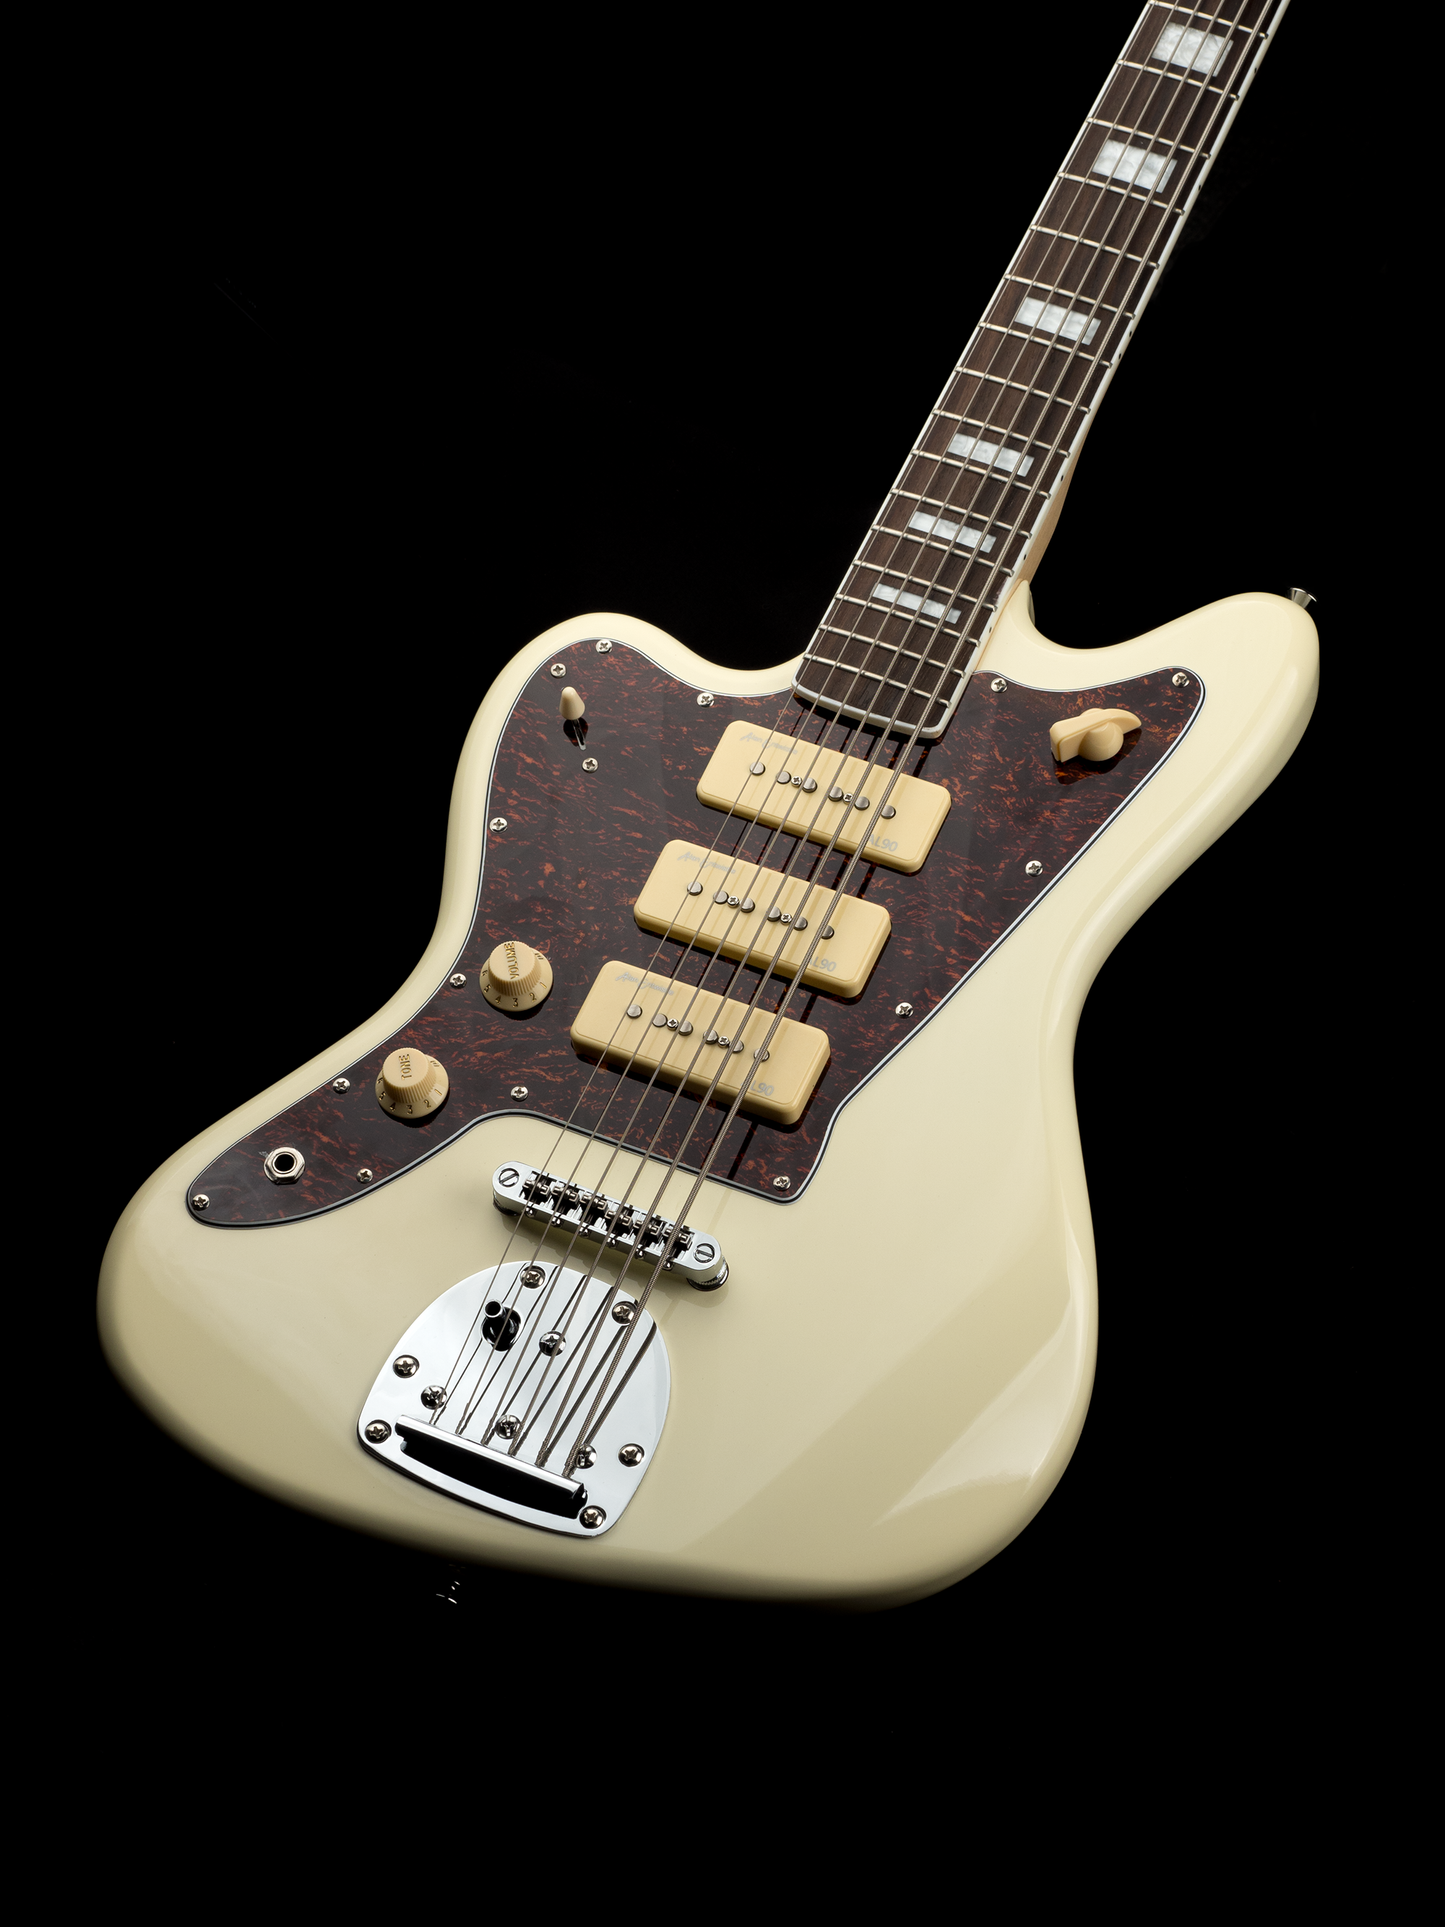 Revelation RJT-60B Vintage White Left Handed Electric Guitar/Bass